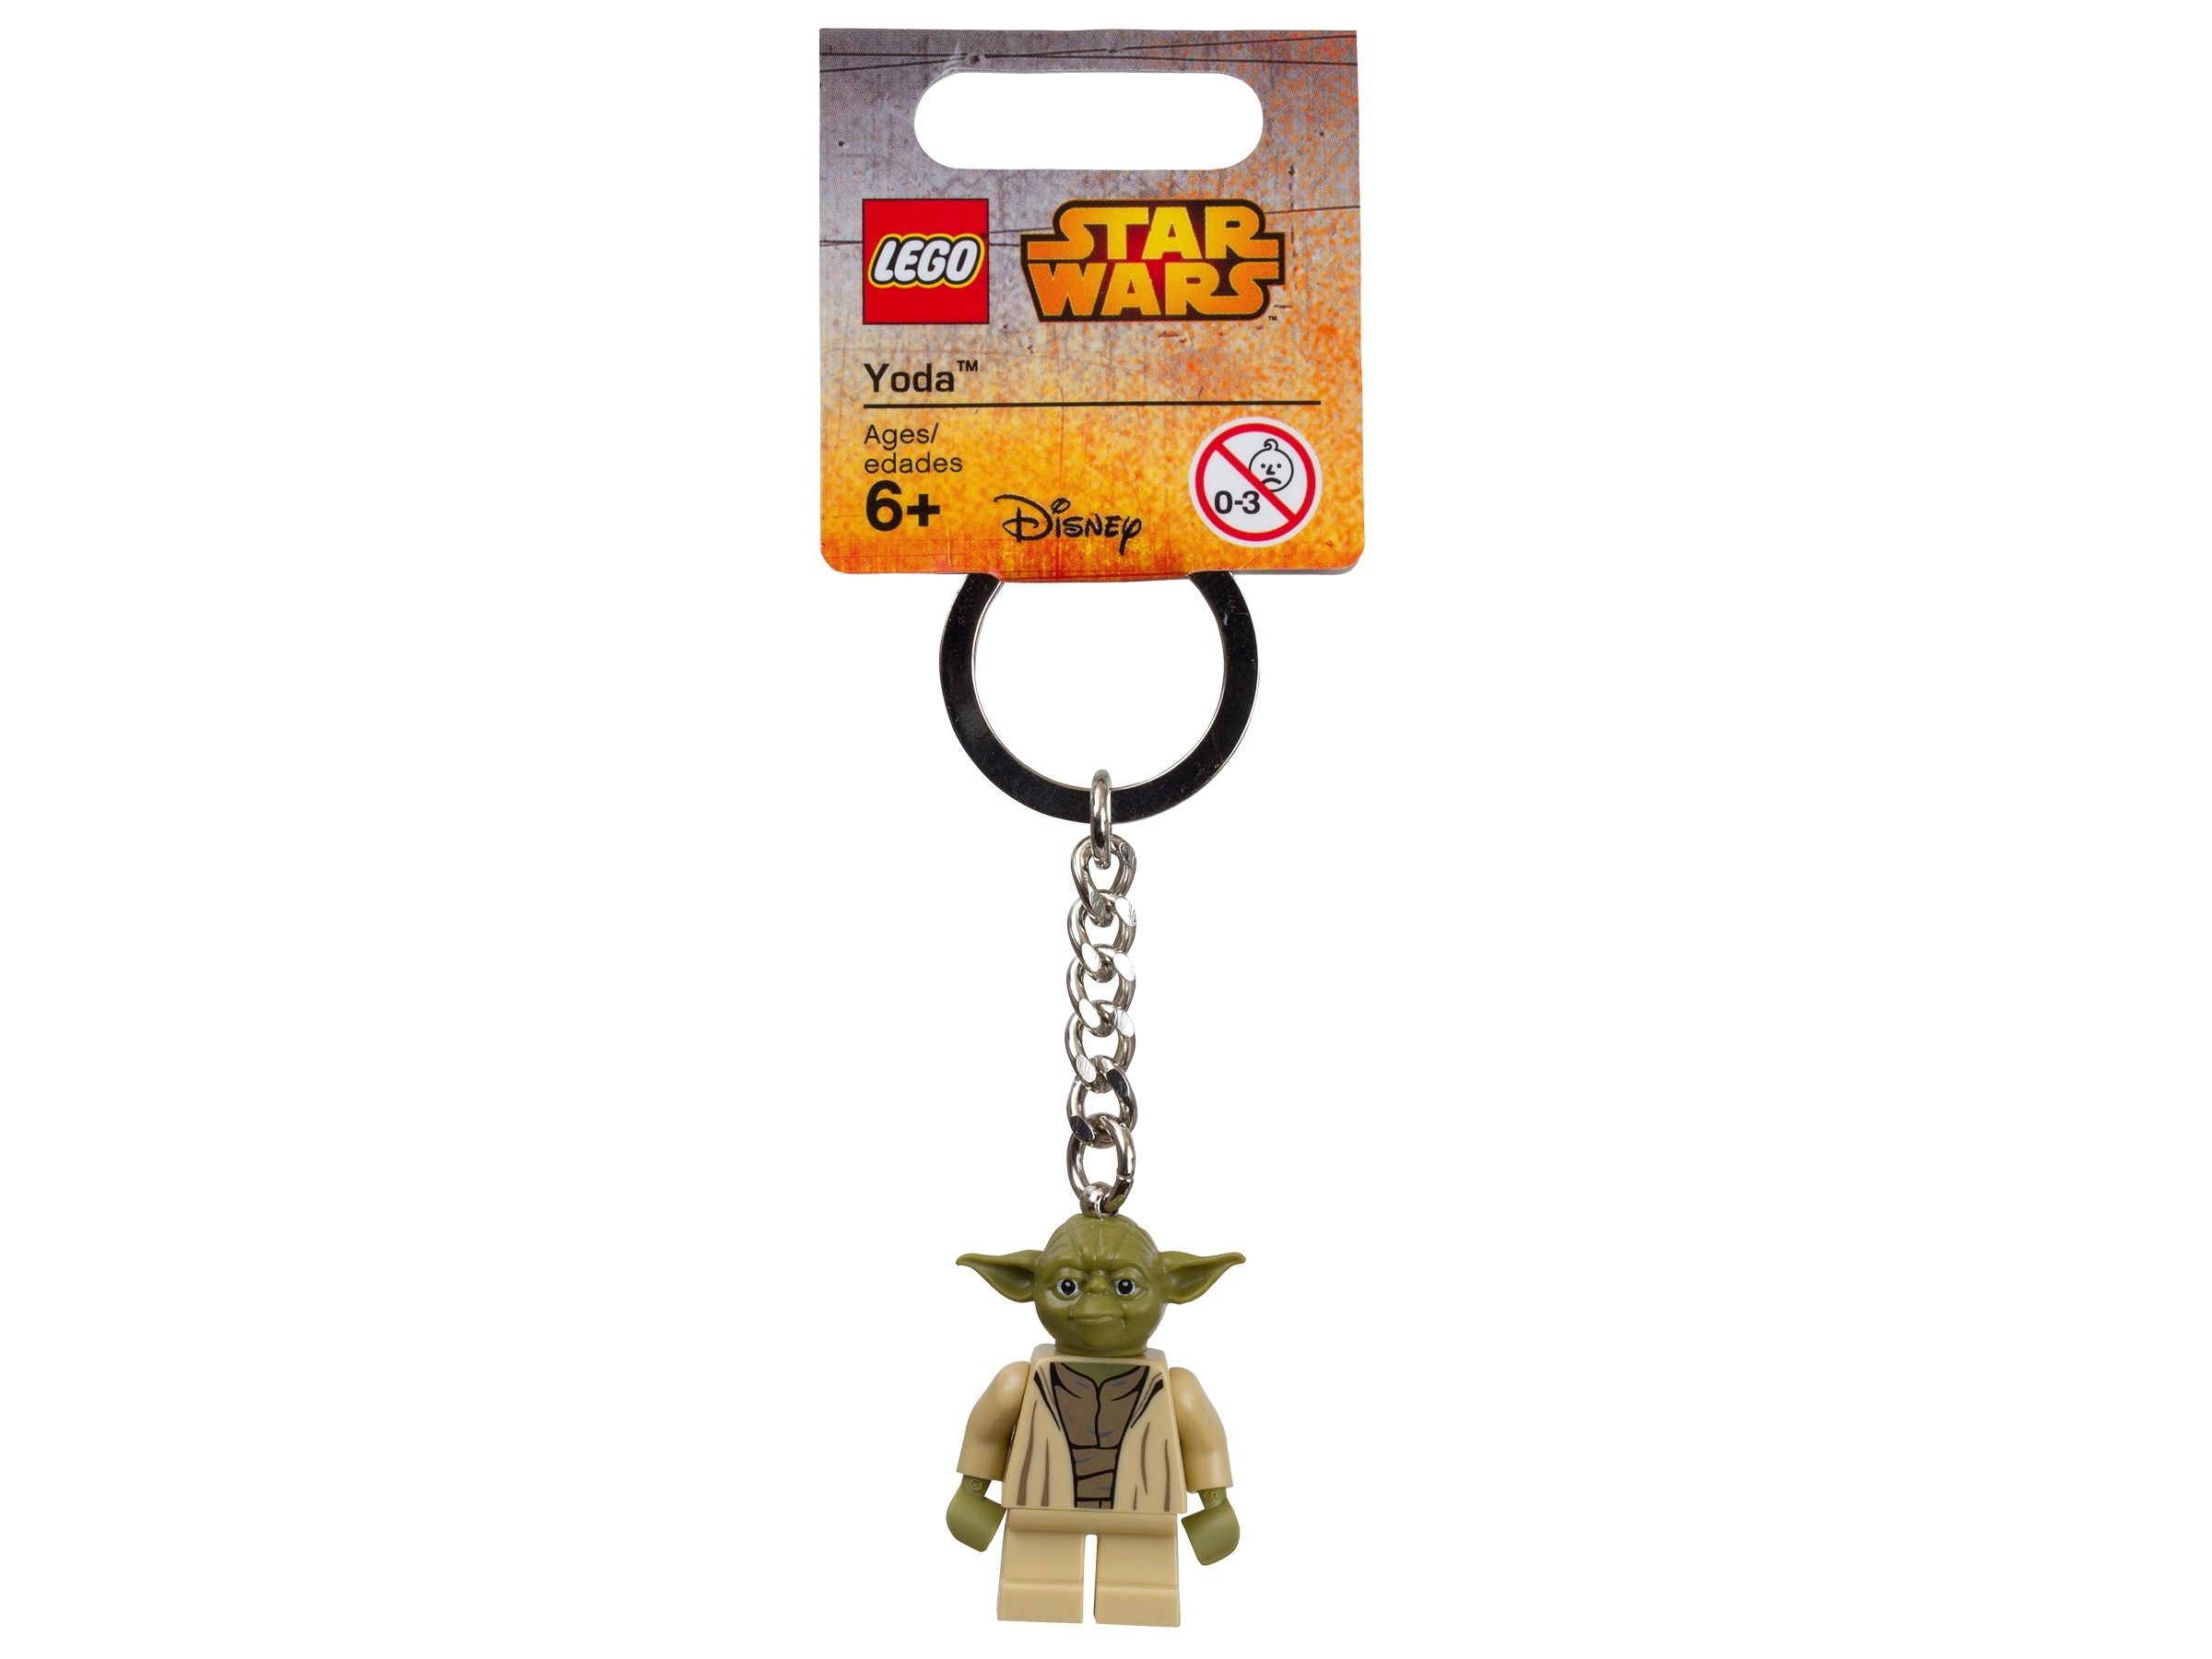 LEGO Star Wars Yoda 853449 keychain portachiavi NUOVO CON ETICHETTE 